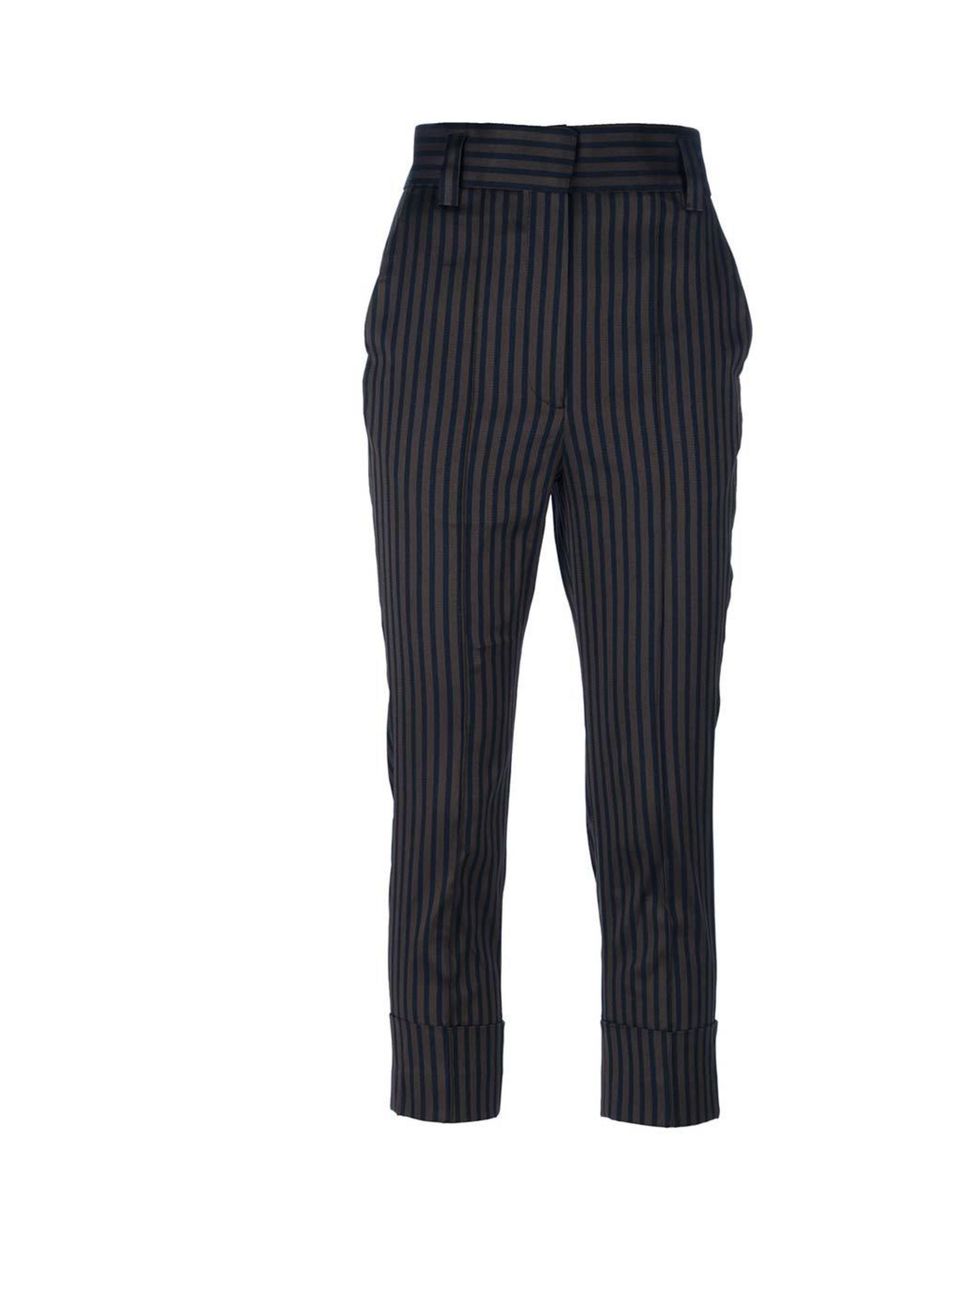 <p>Haider Ackermann Pinstripe trousers, £438 available at <a href="http://www.farfetch.com/shopping/women/haider-ackermann-striped-cropped-trouser-item-10378761.aspx">Farfetch.com</a></p>